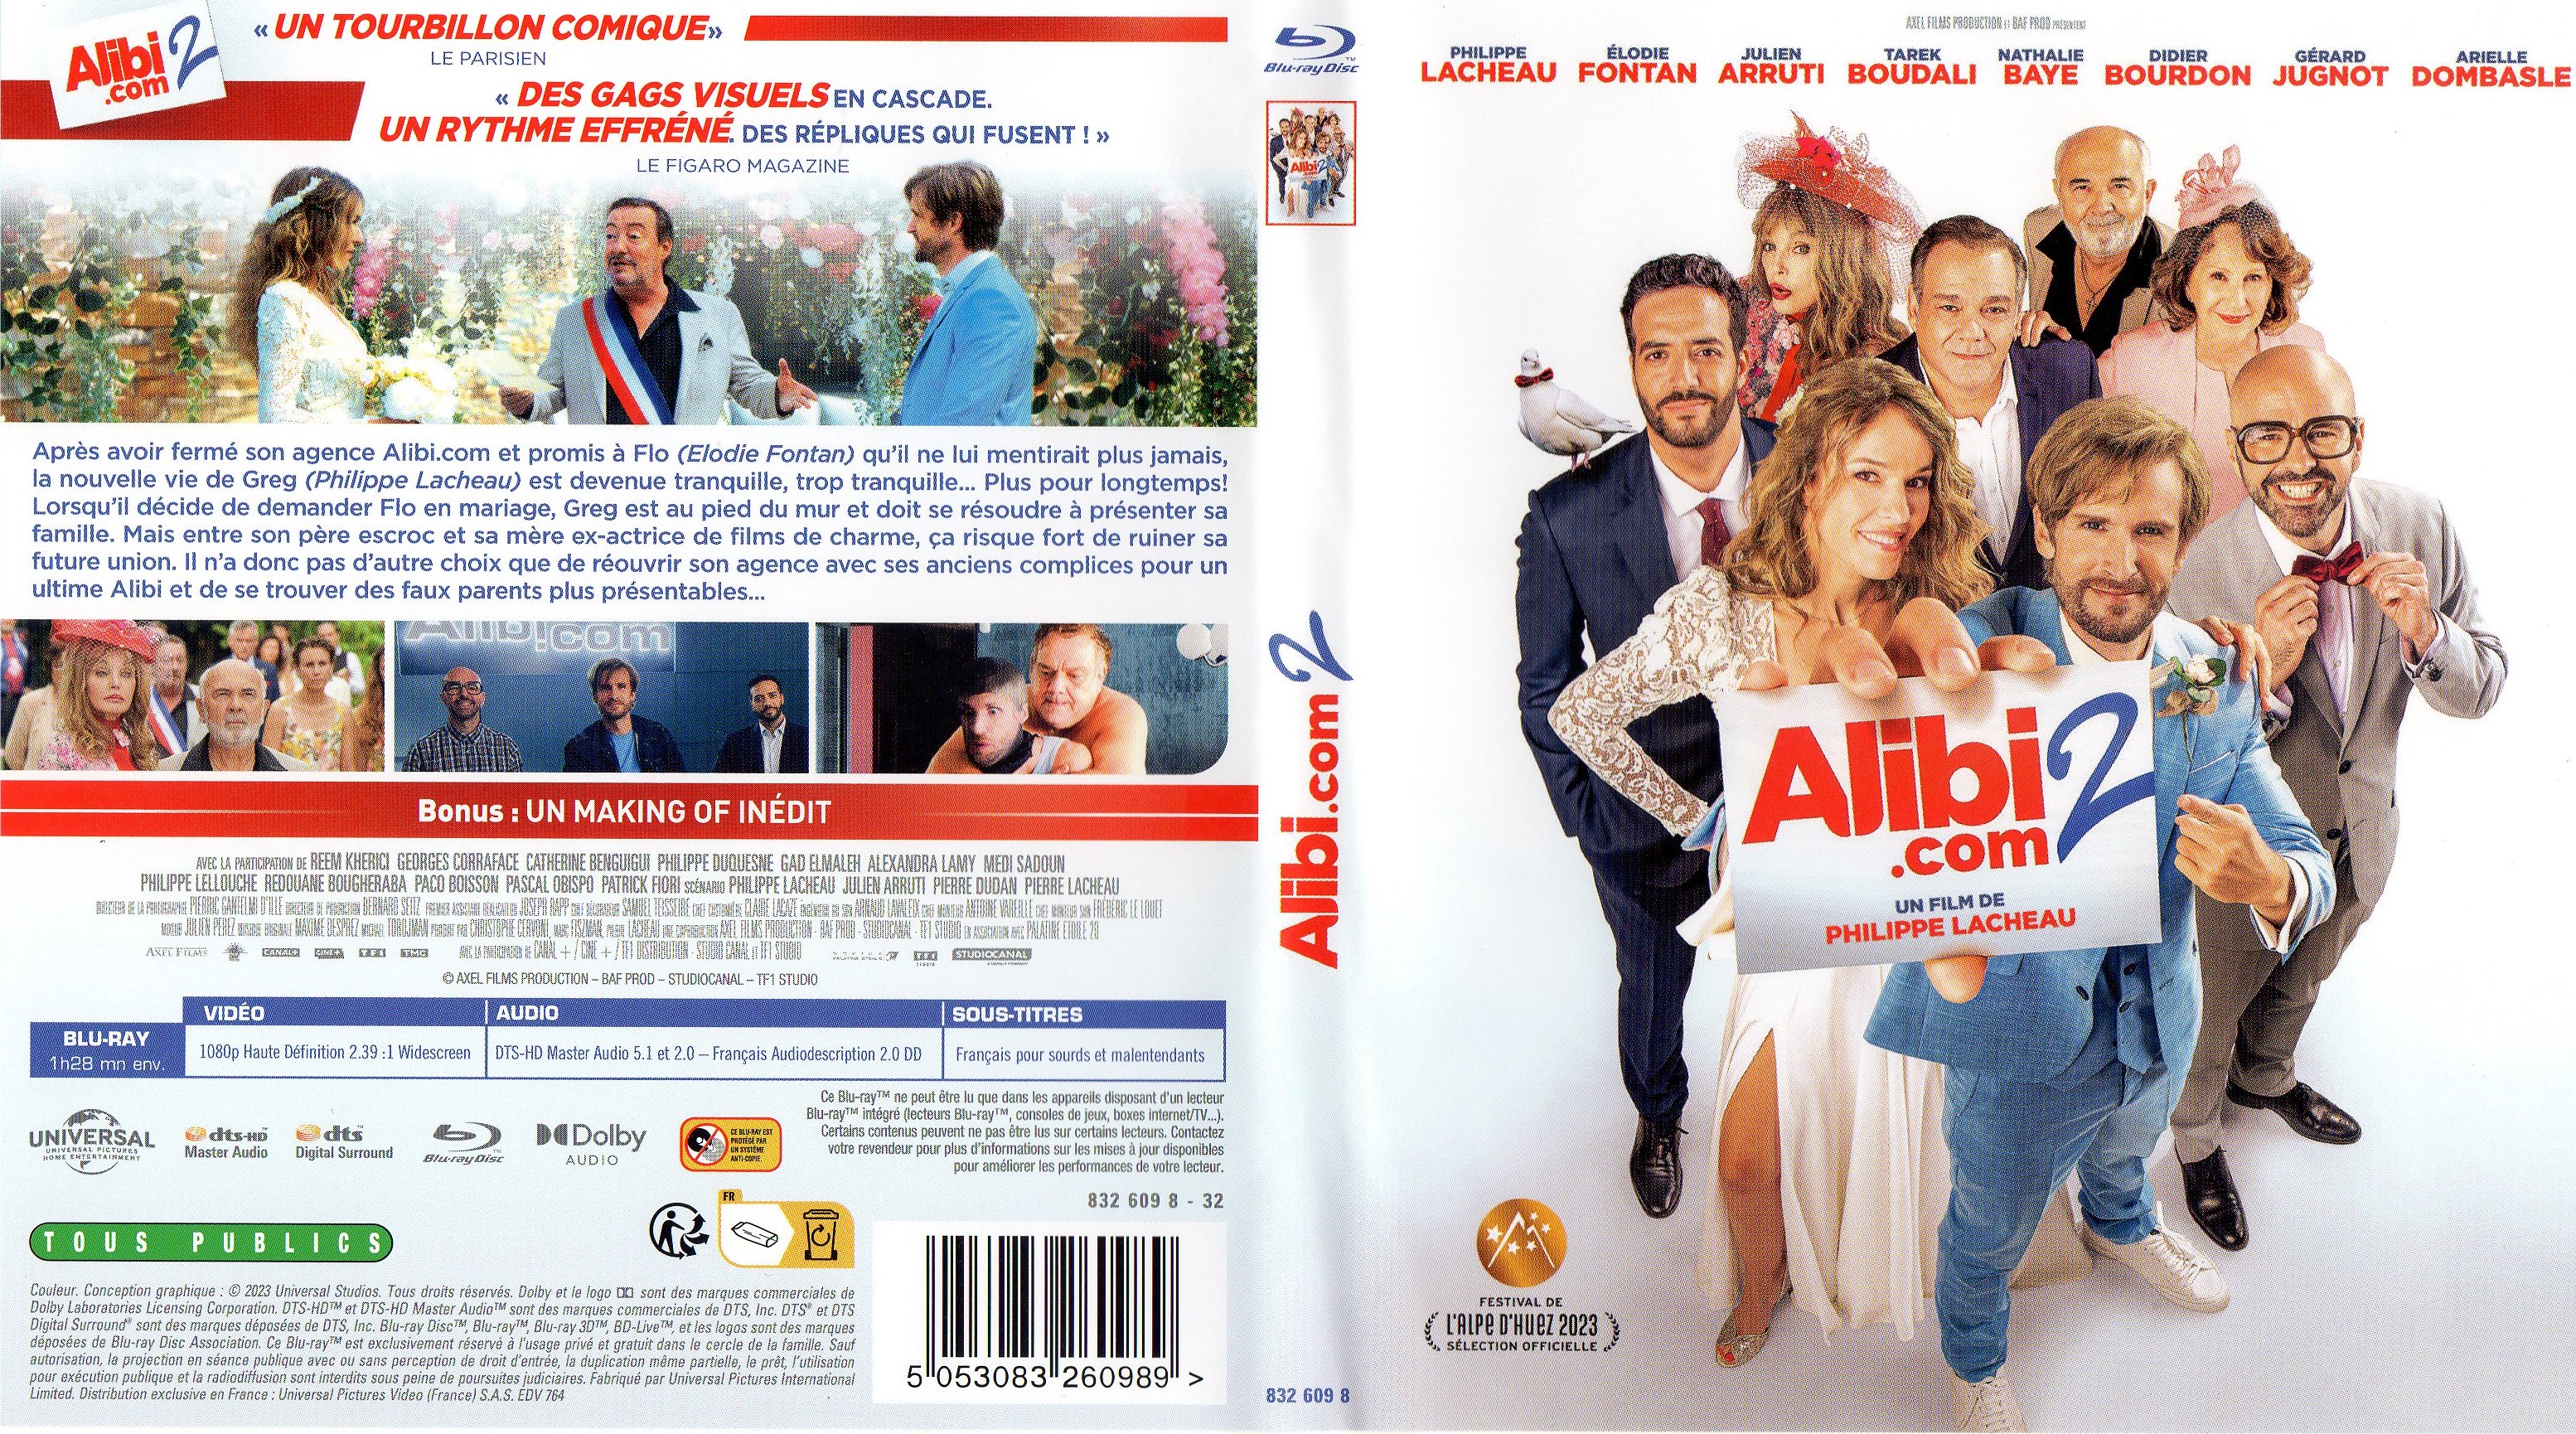 Jaquette DVD Alibi.com 2 (BLU-RAY)